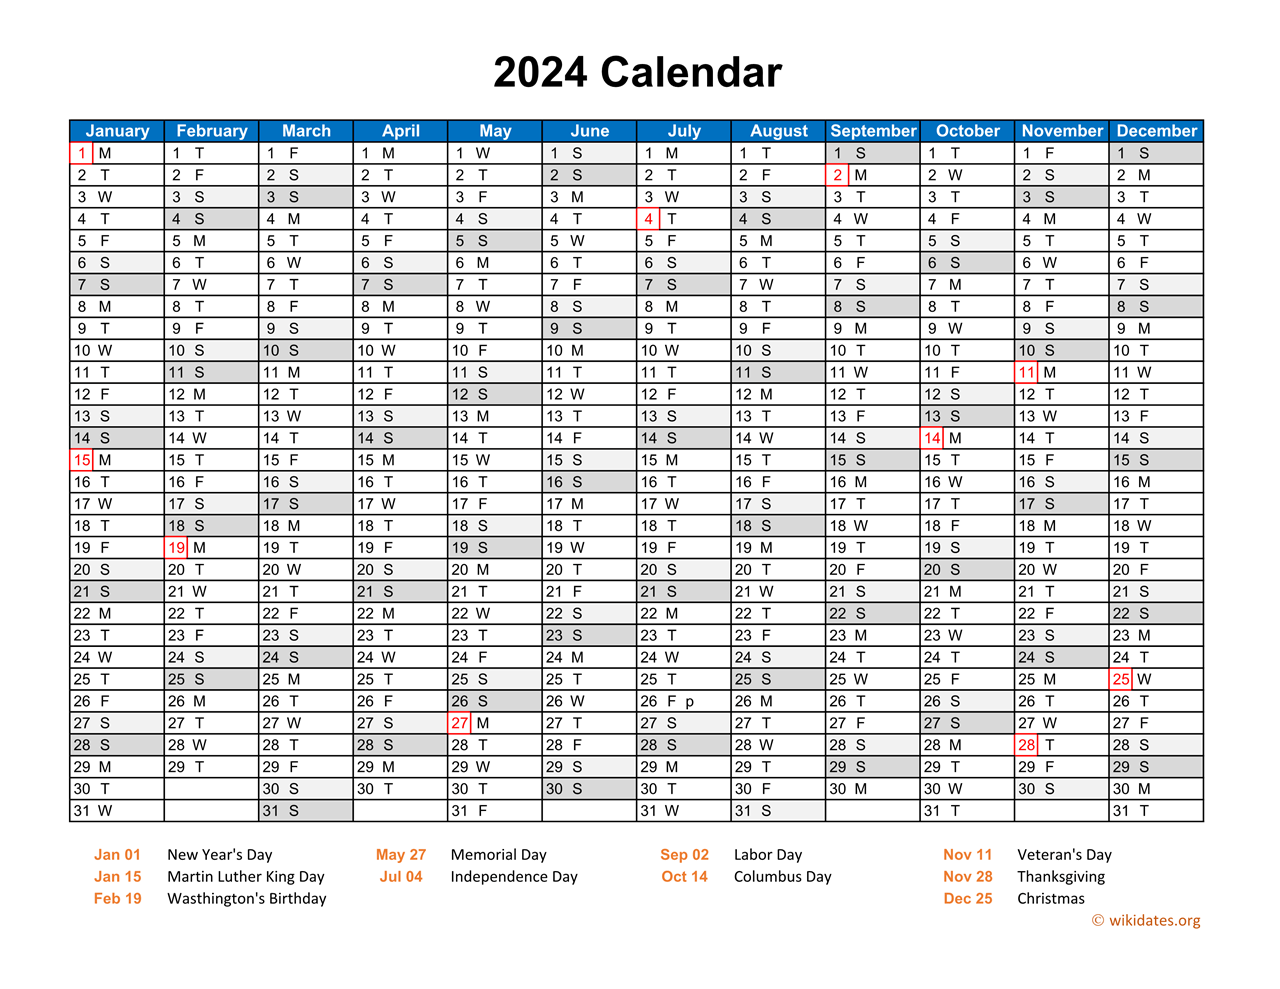 2024-calendar-horizontal-one-page-wikidates